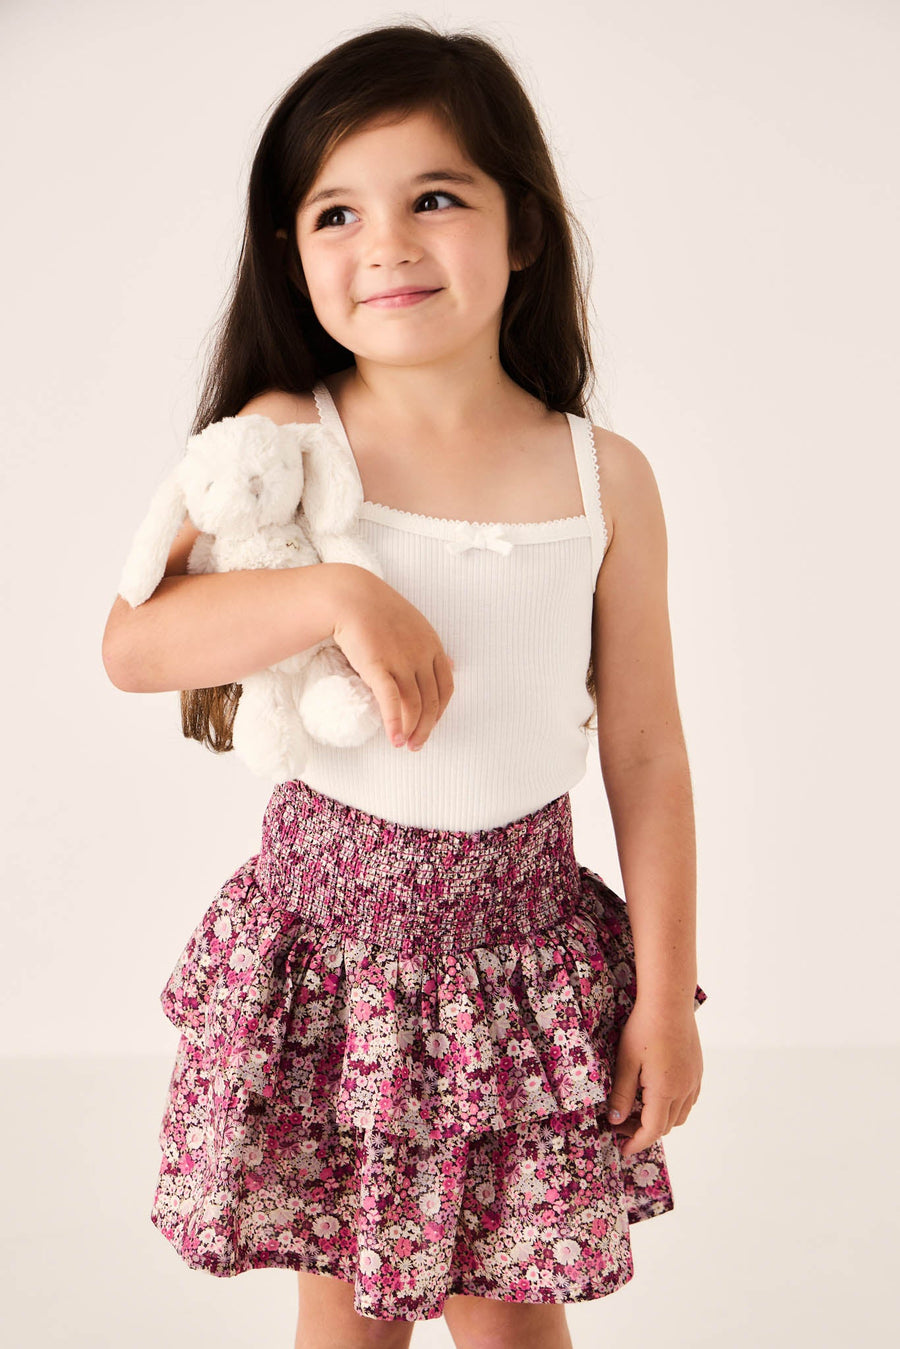 Organic Cotton Samantha Skirt - Garden Print Childrens Skirt from Jamie Kay USA